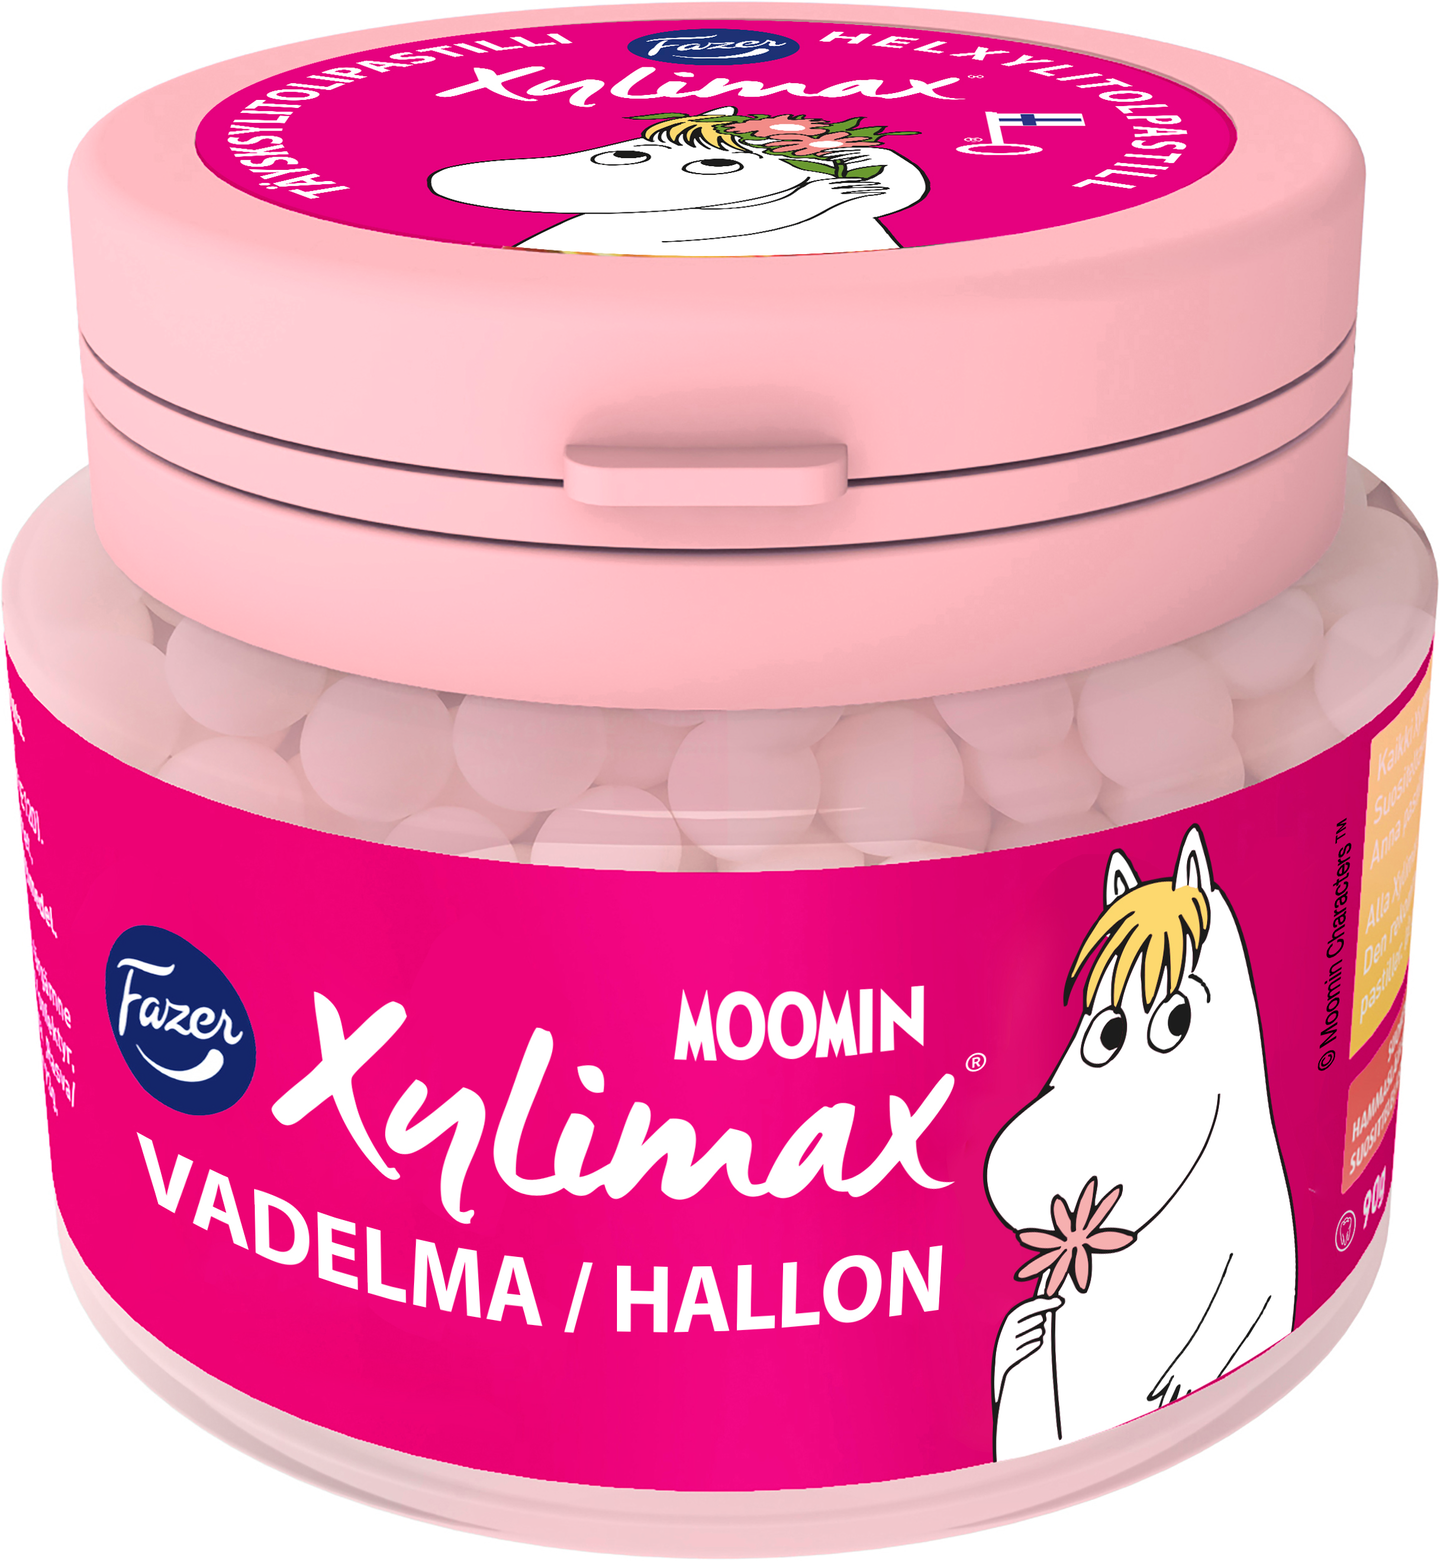 Xylimax Moomin vadelma pastilli 90g